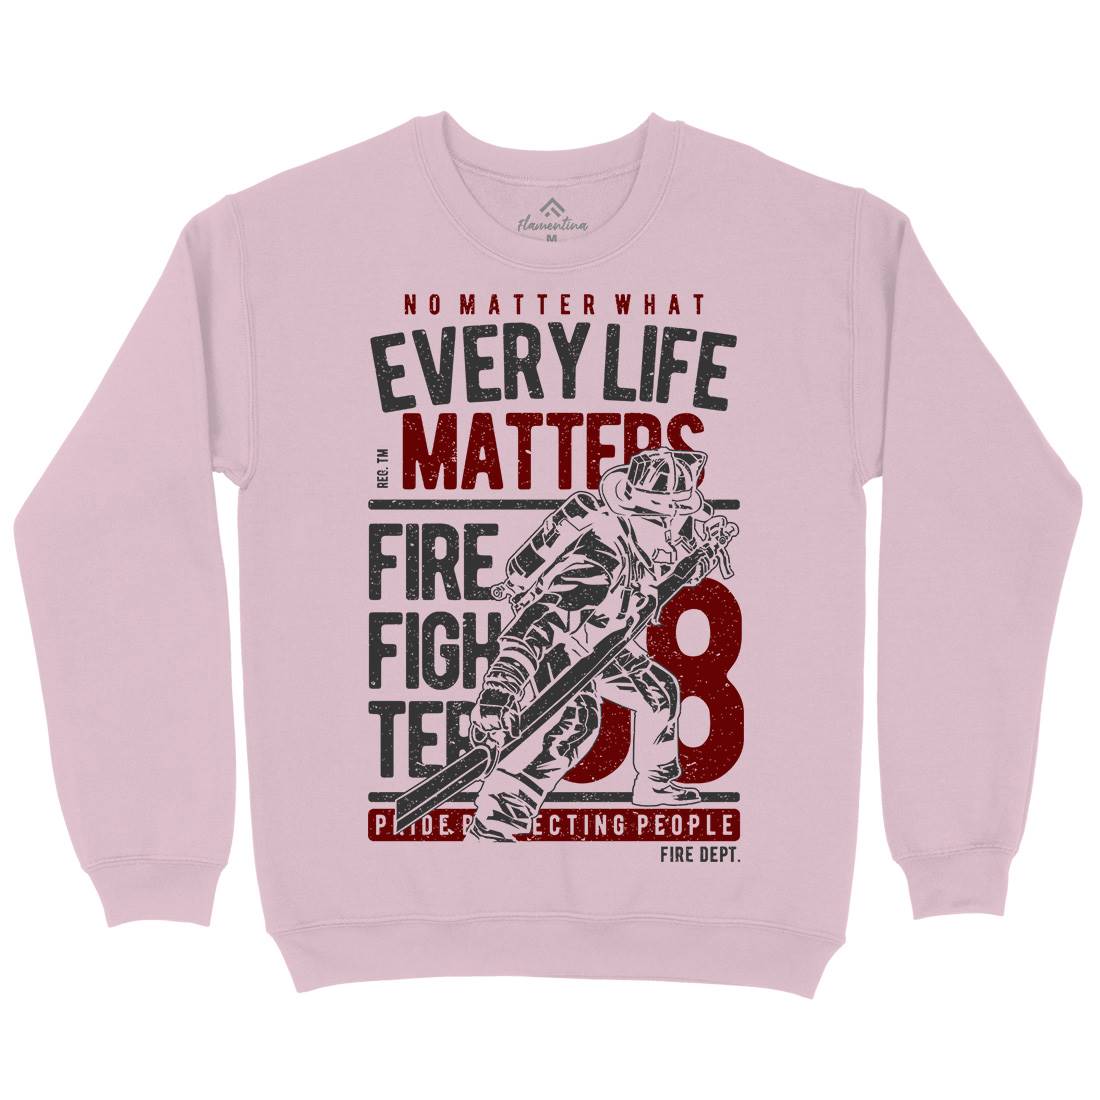 Every Life Matters Kids Crew Neck Sweatshirt Firefighters A650